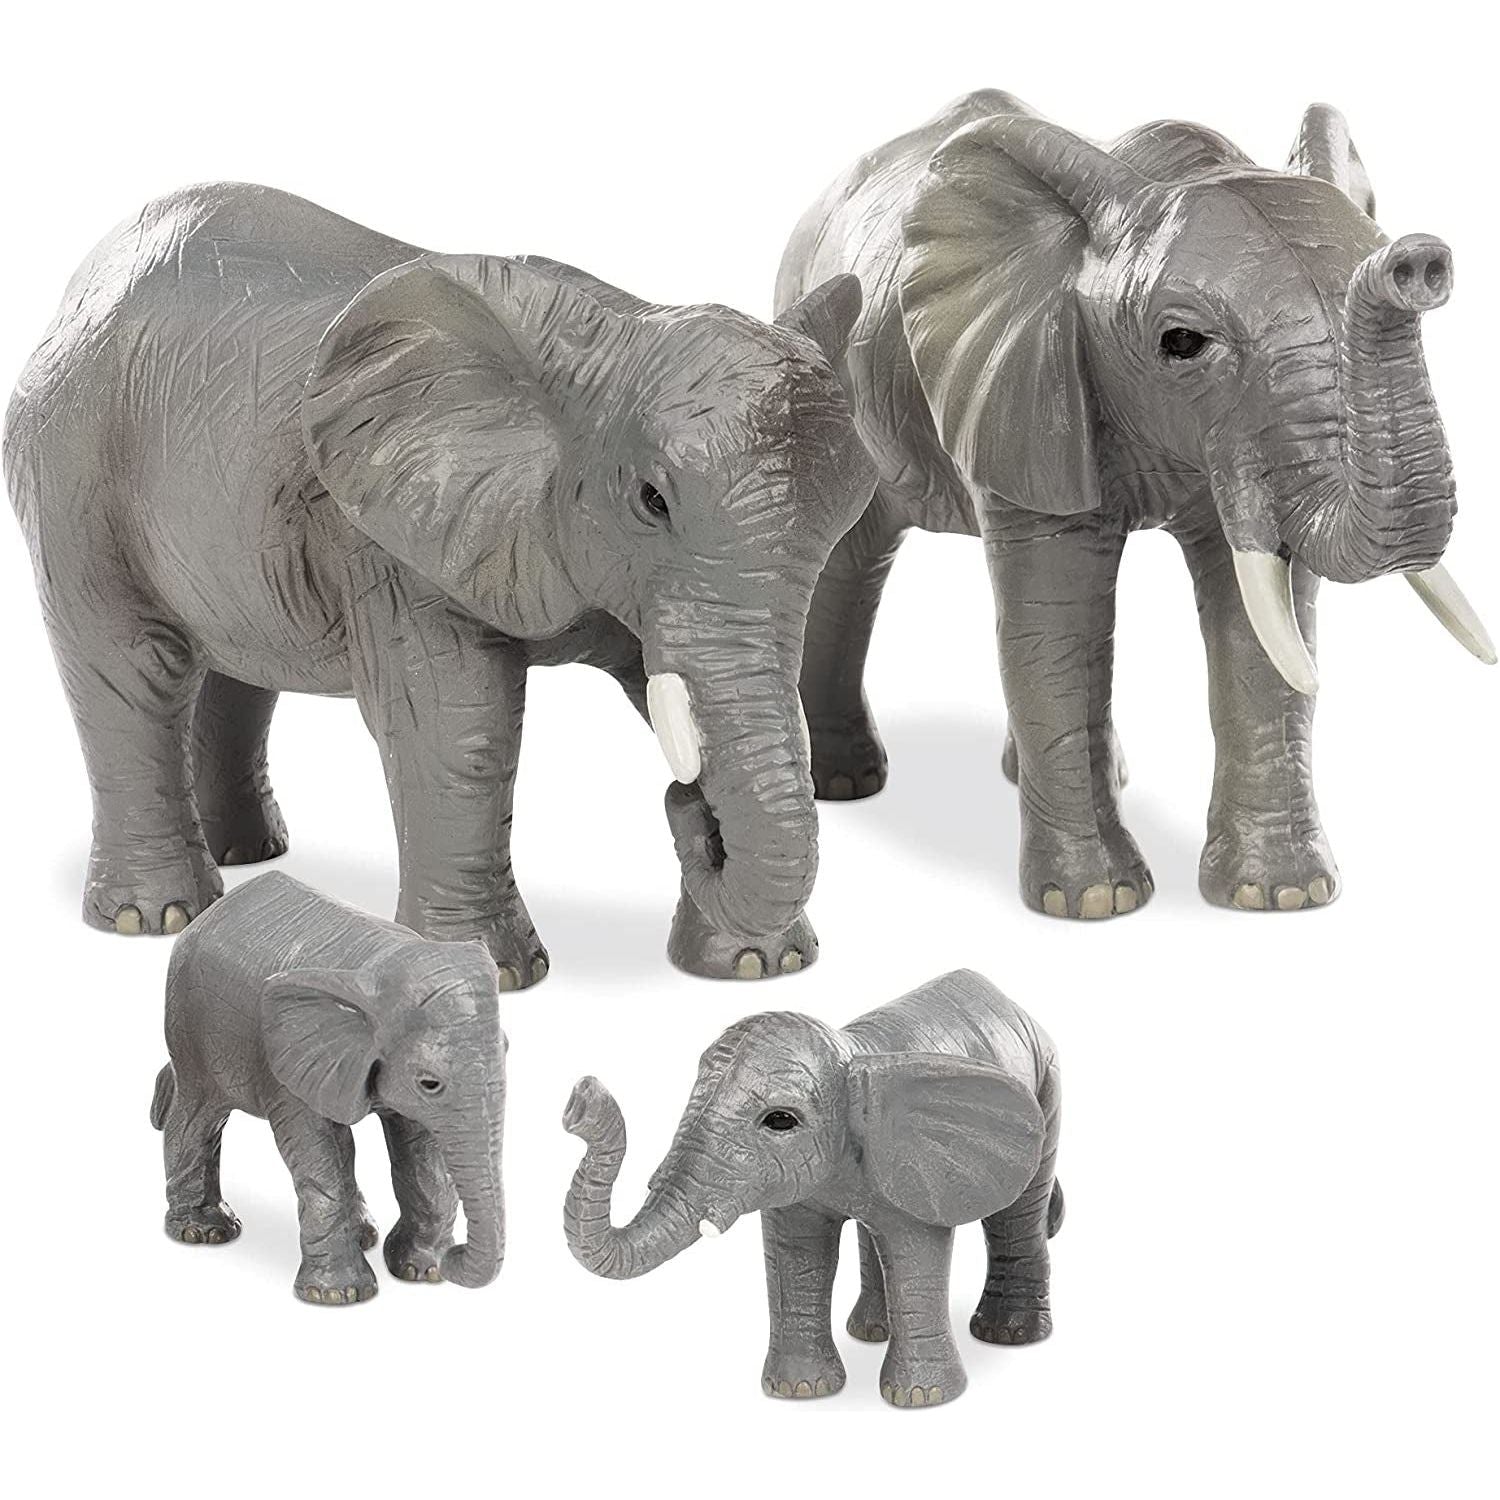 Elephant Family Animal Figures